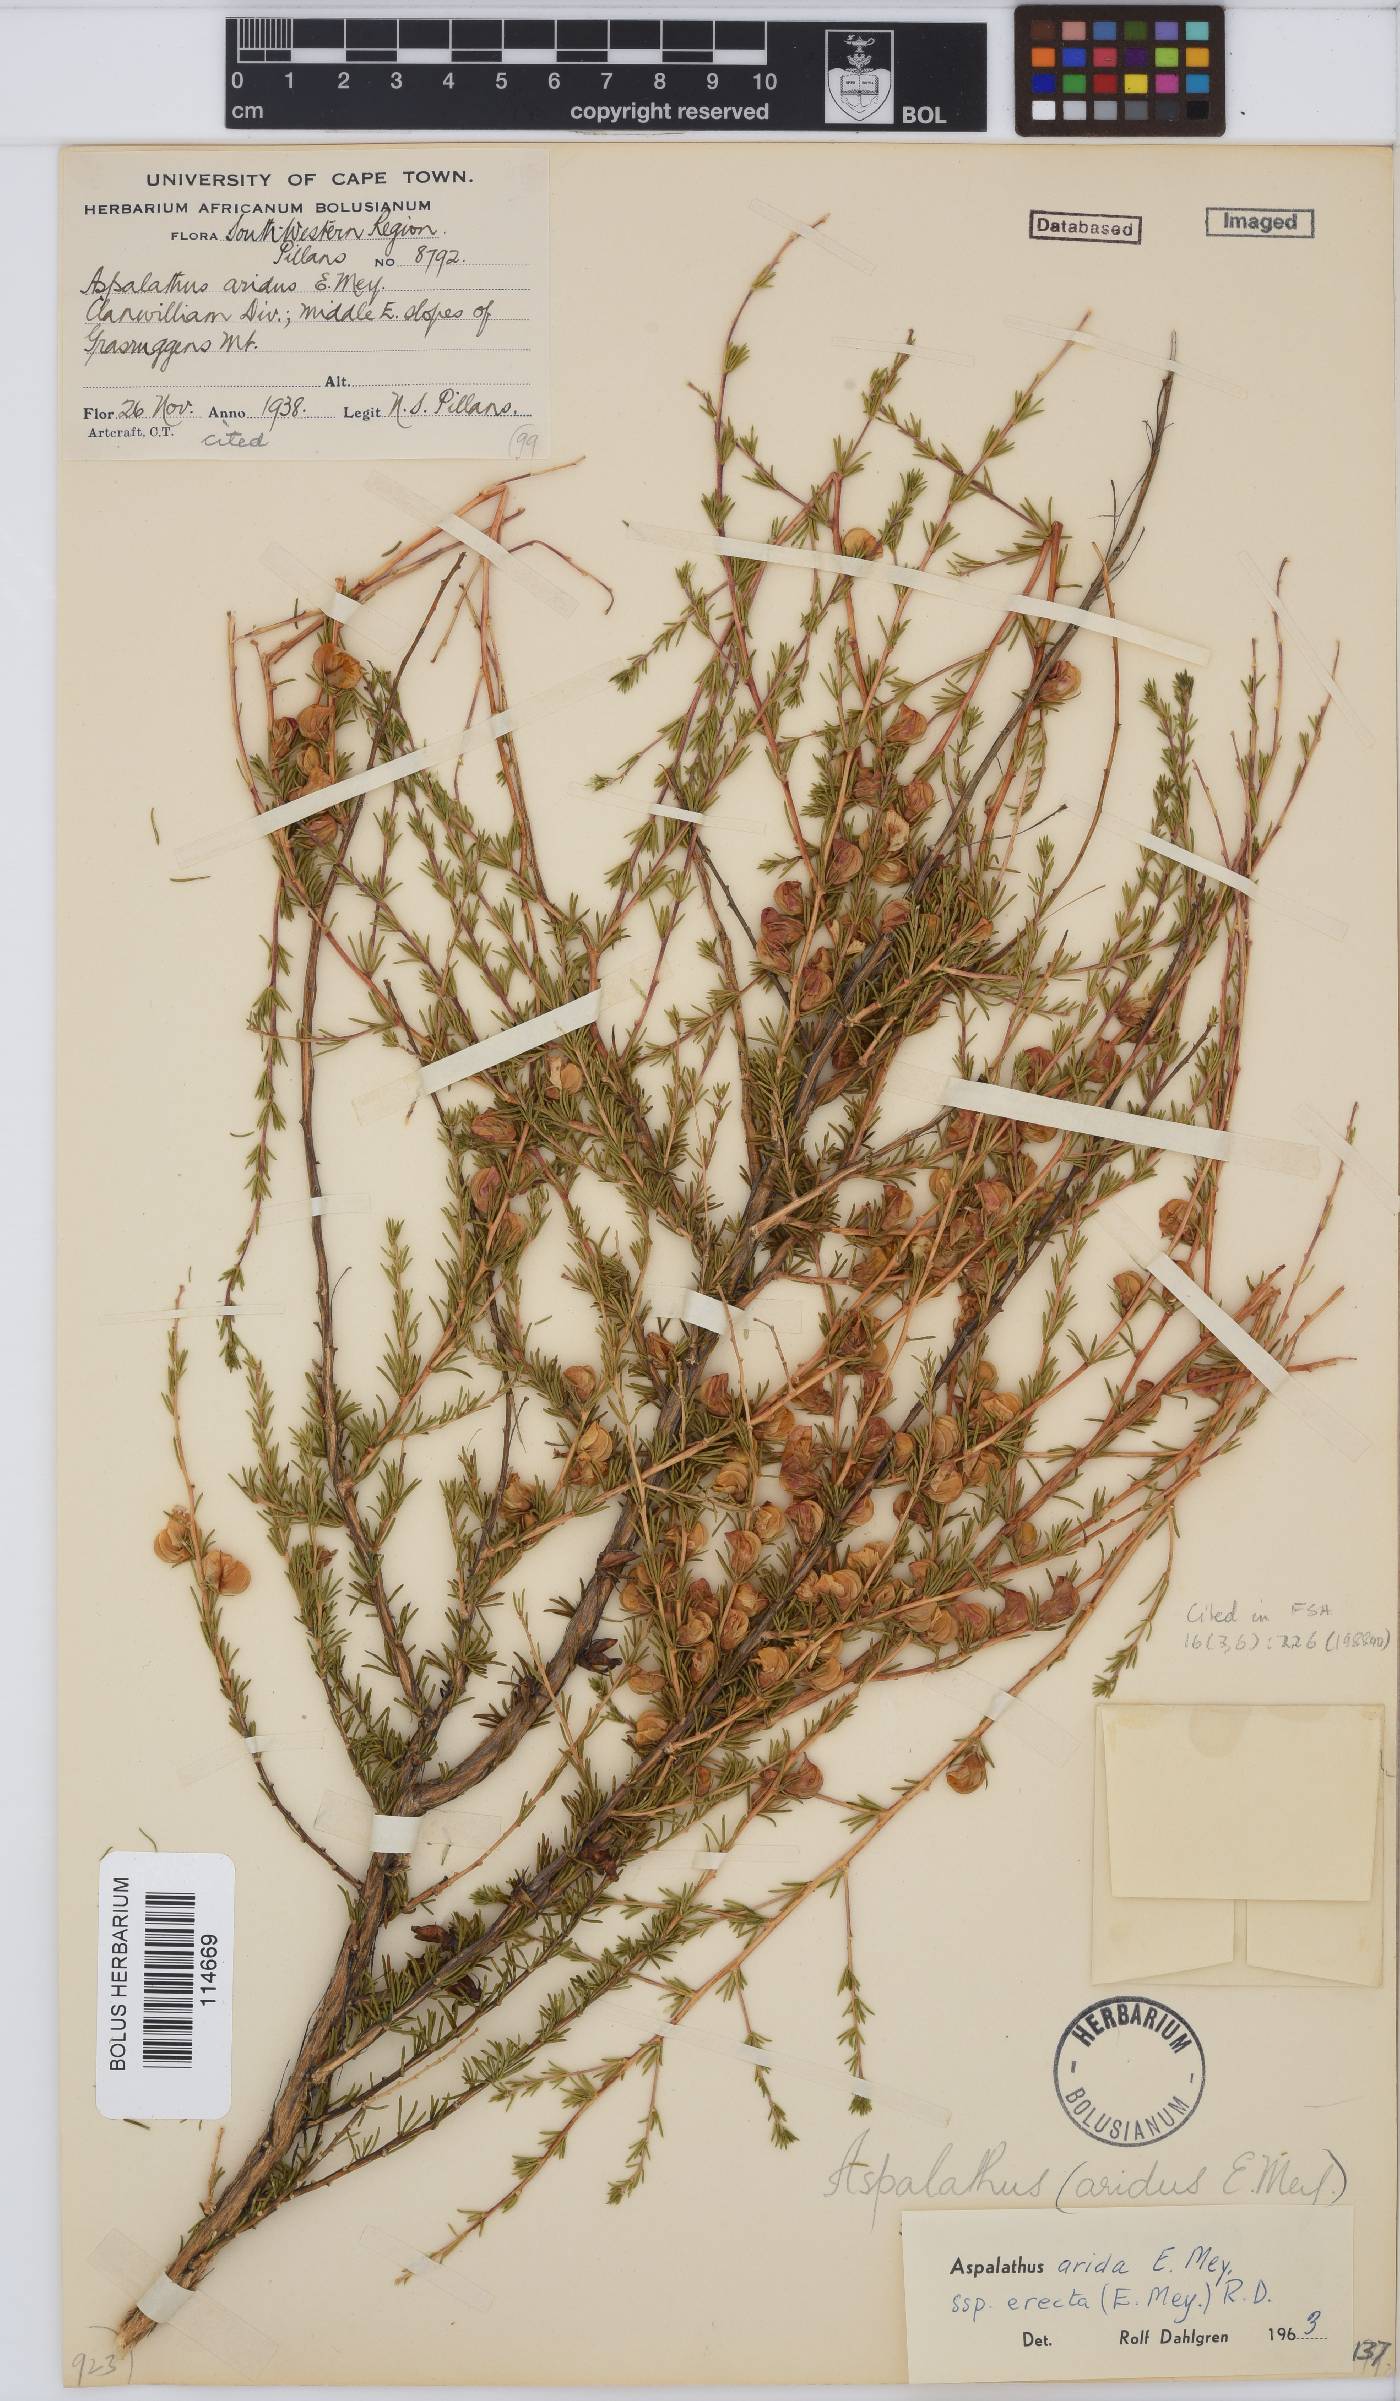 Aspalathus arida subsp. erecta image